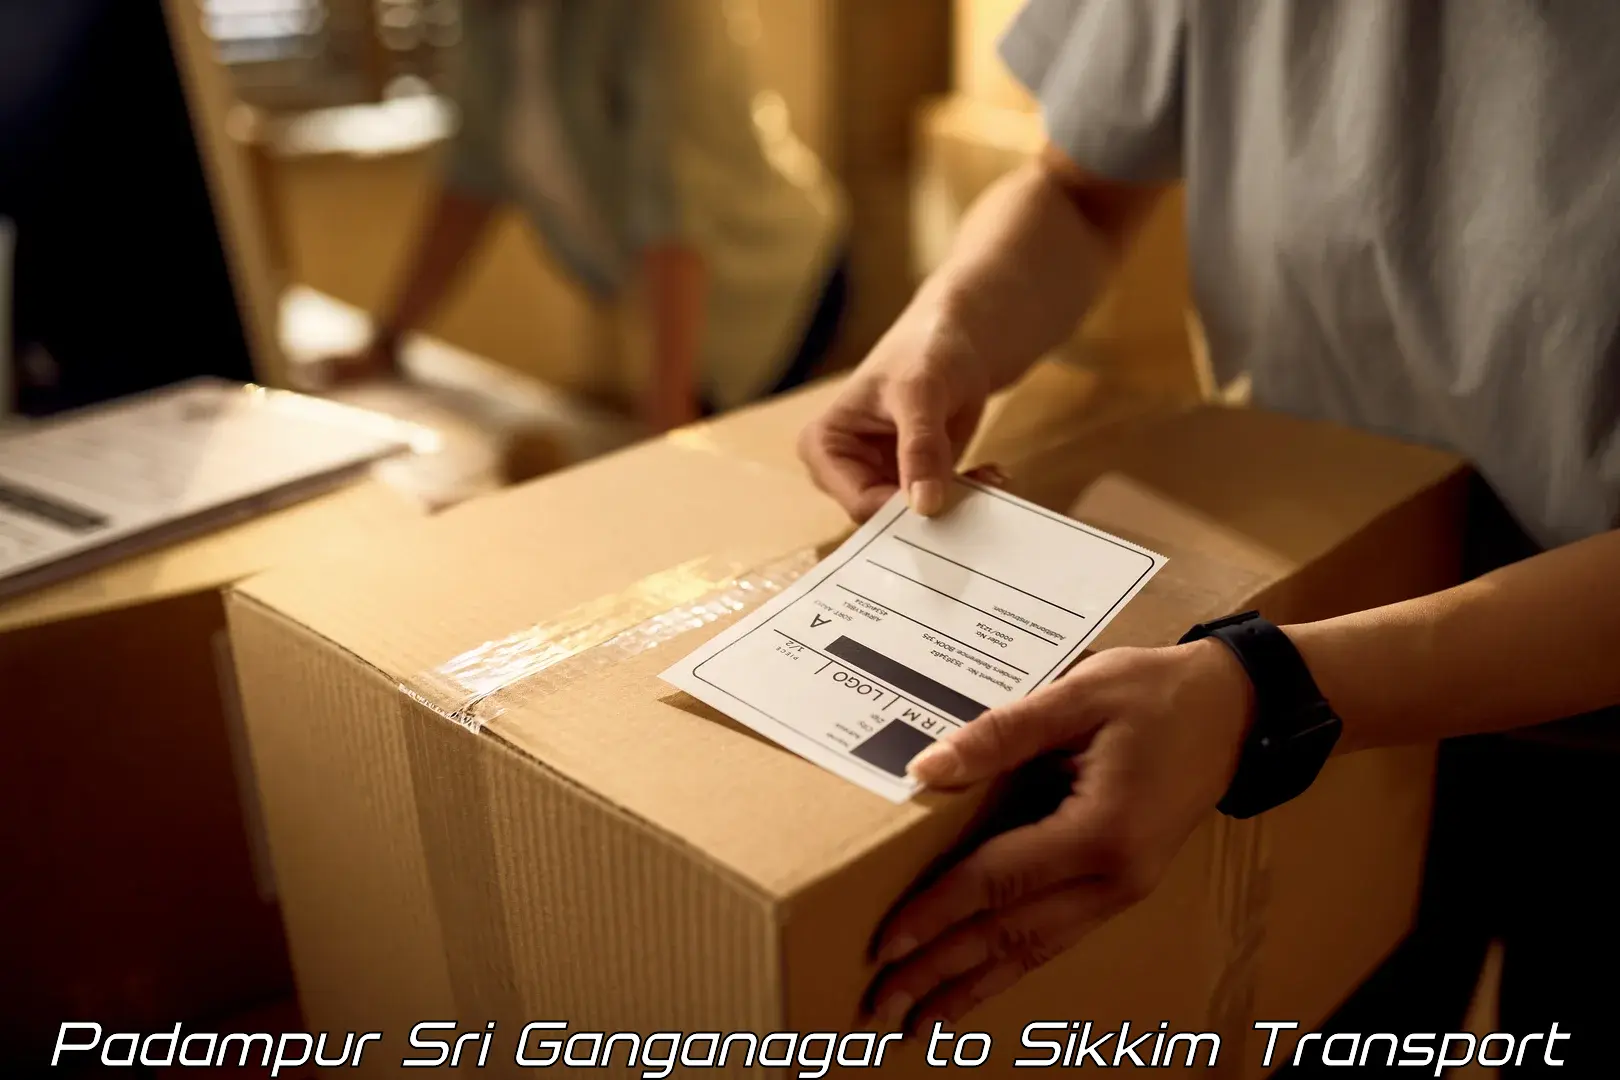 Cargo train transport services Padampur Sri Ganganagar to Sikkim